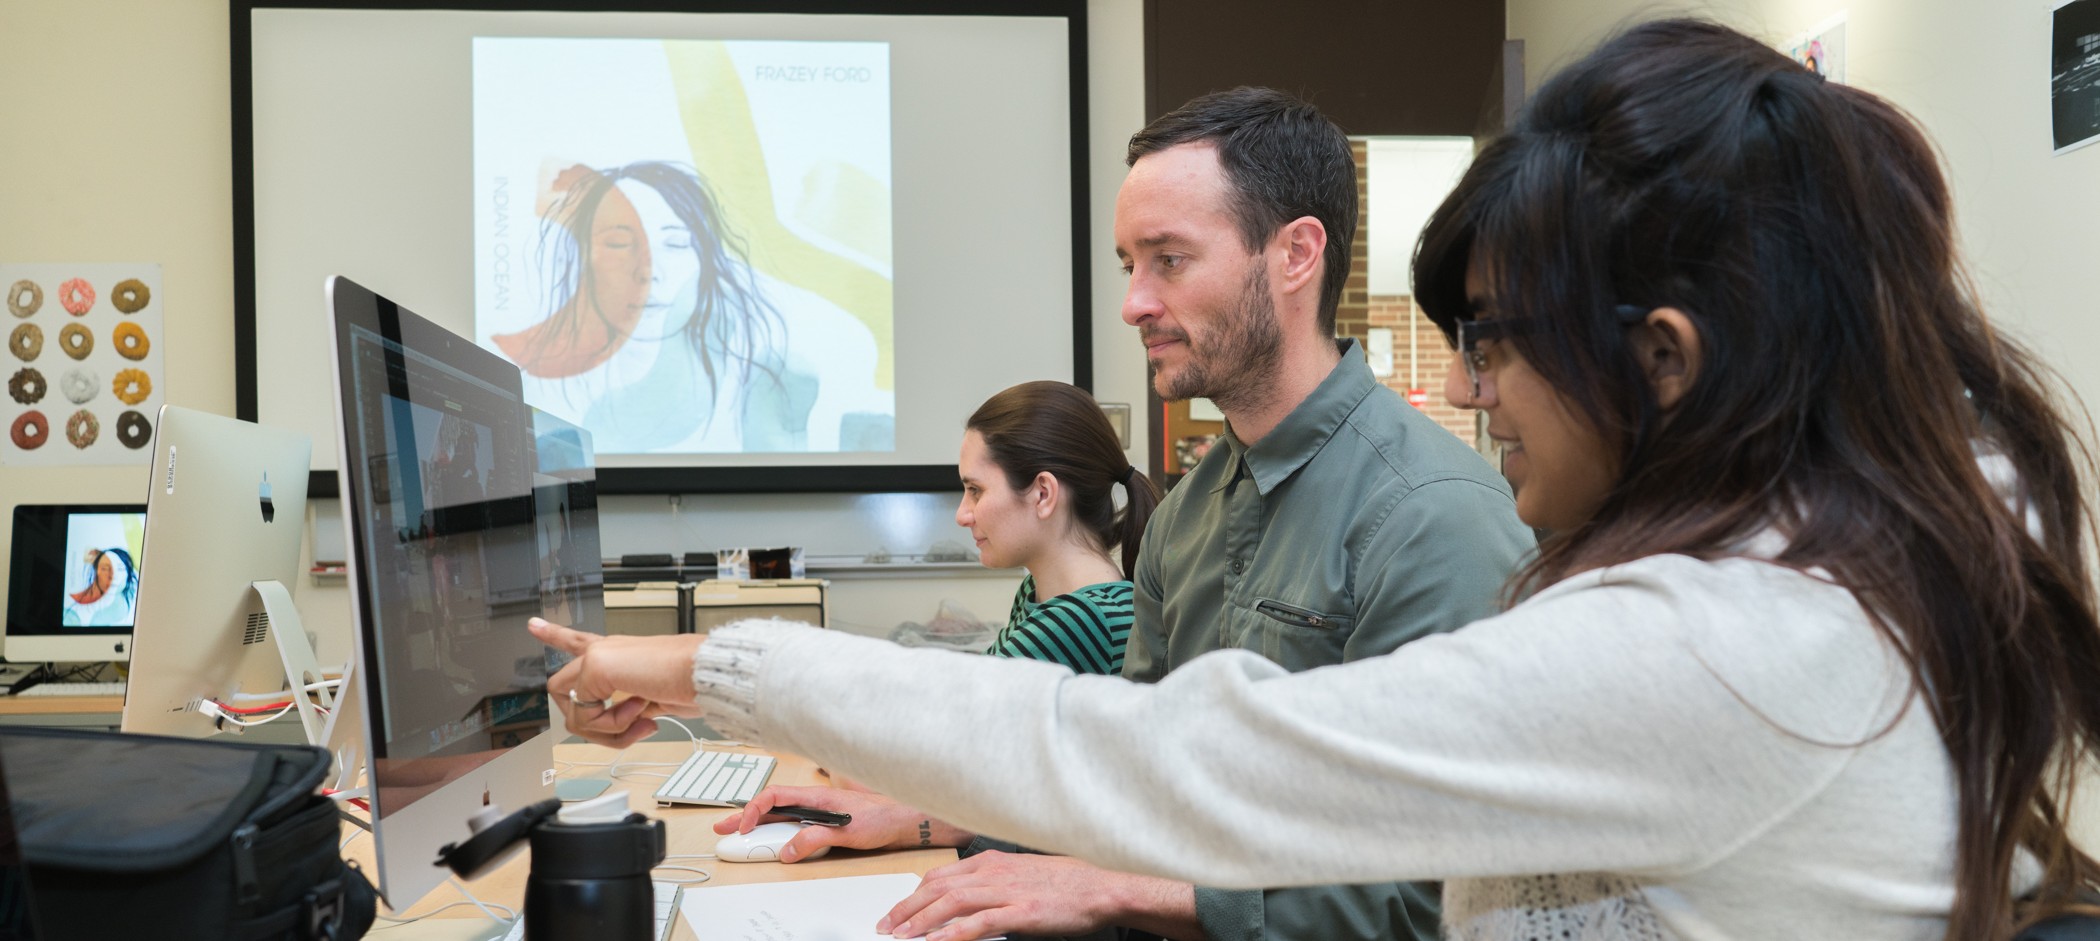 Student showing professor digital artwork